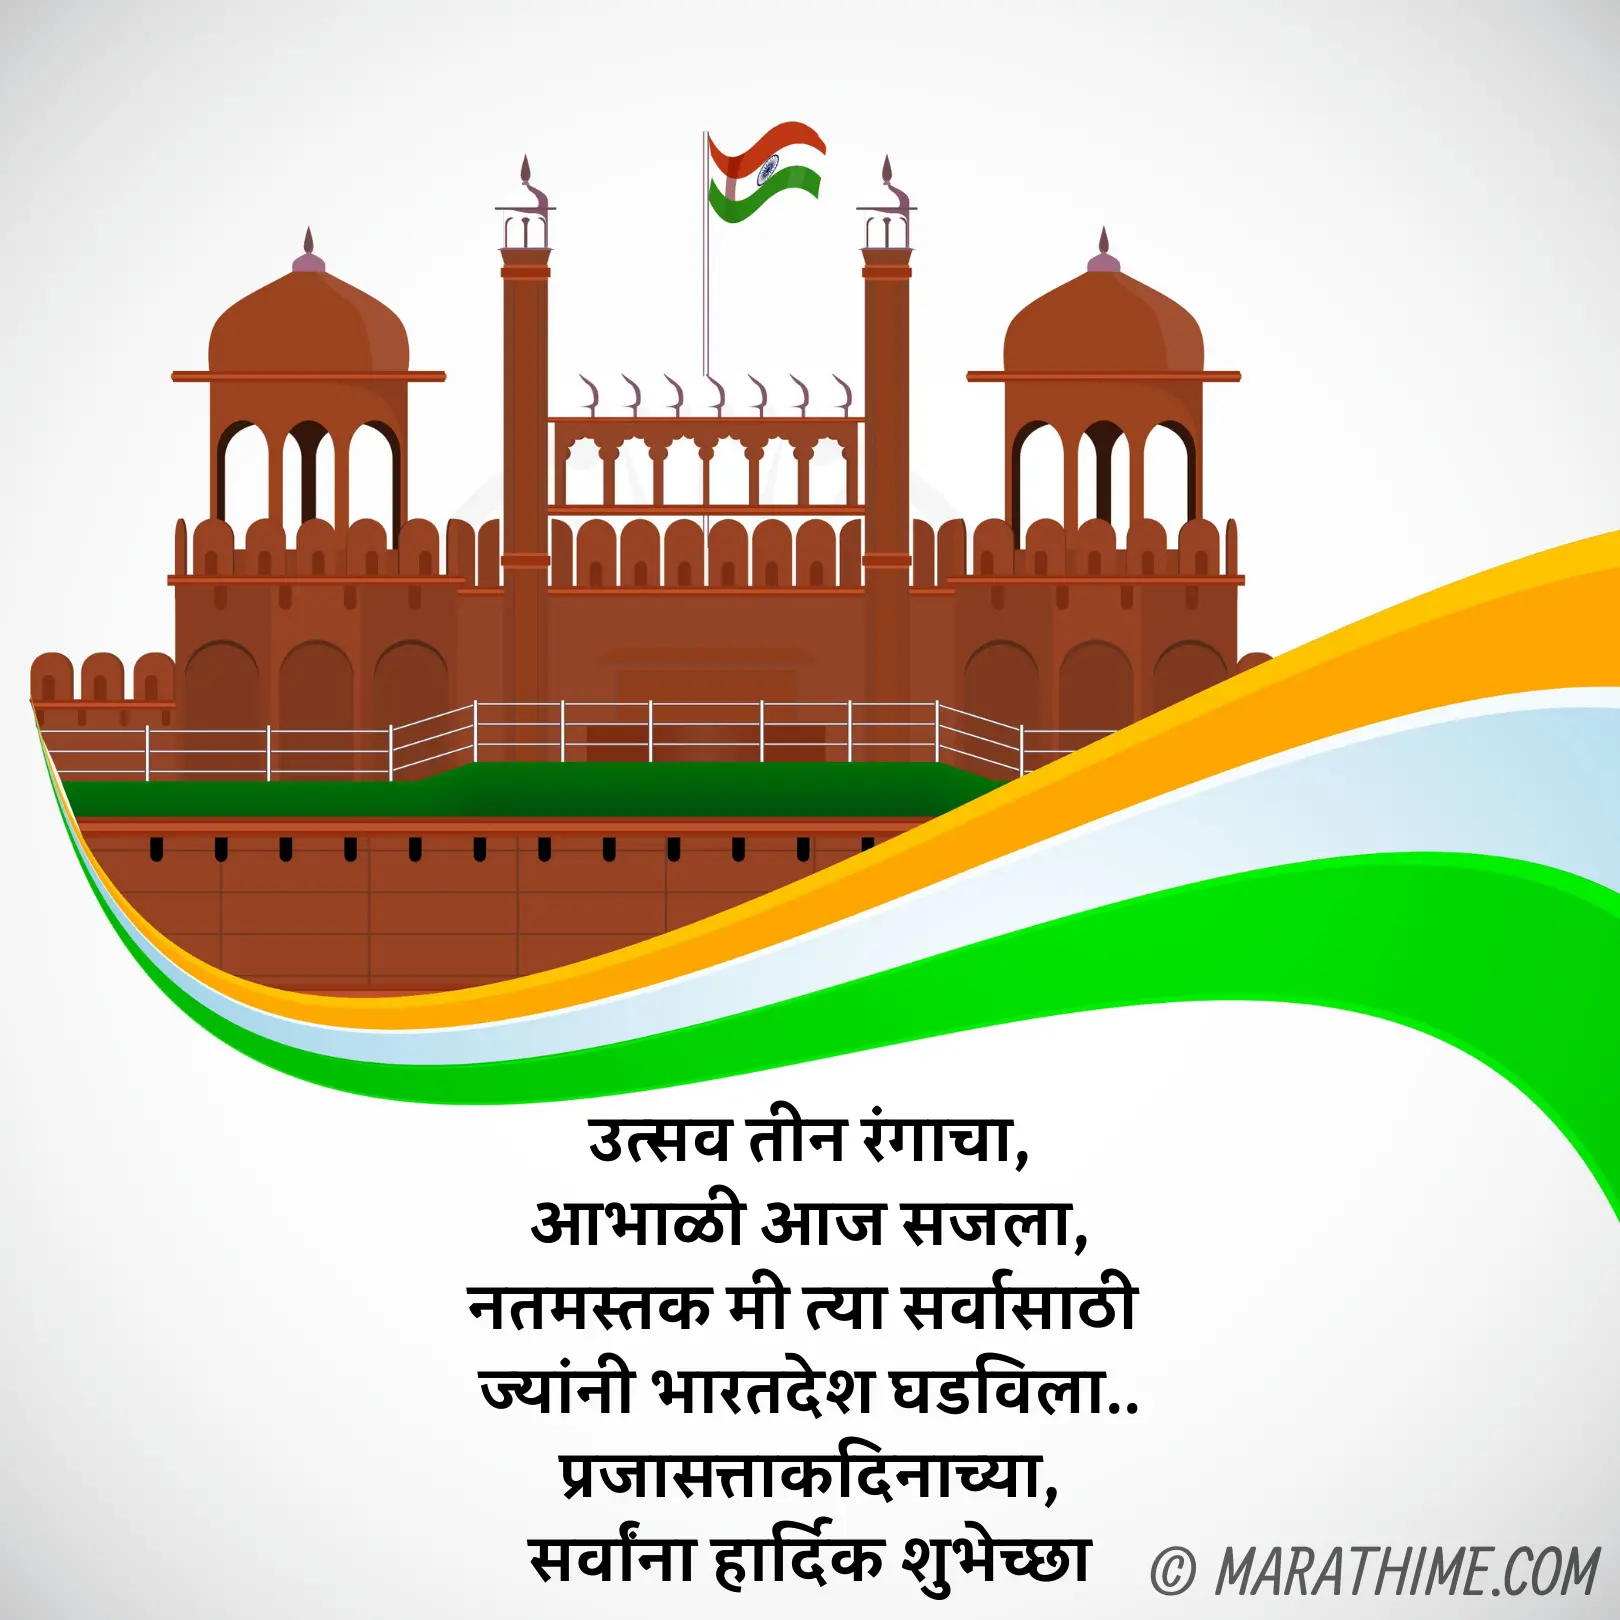 प्रजासत्ताक दिन शुभेच्छा-republic day quotes in marathi (5)